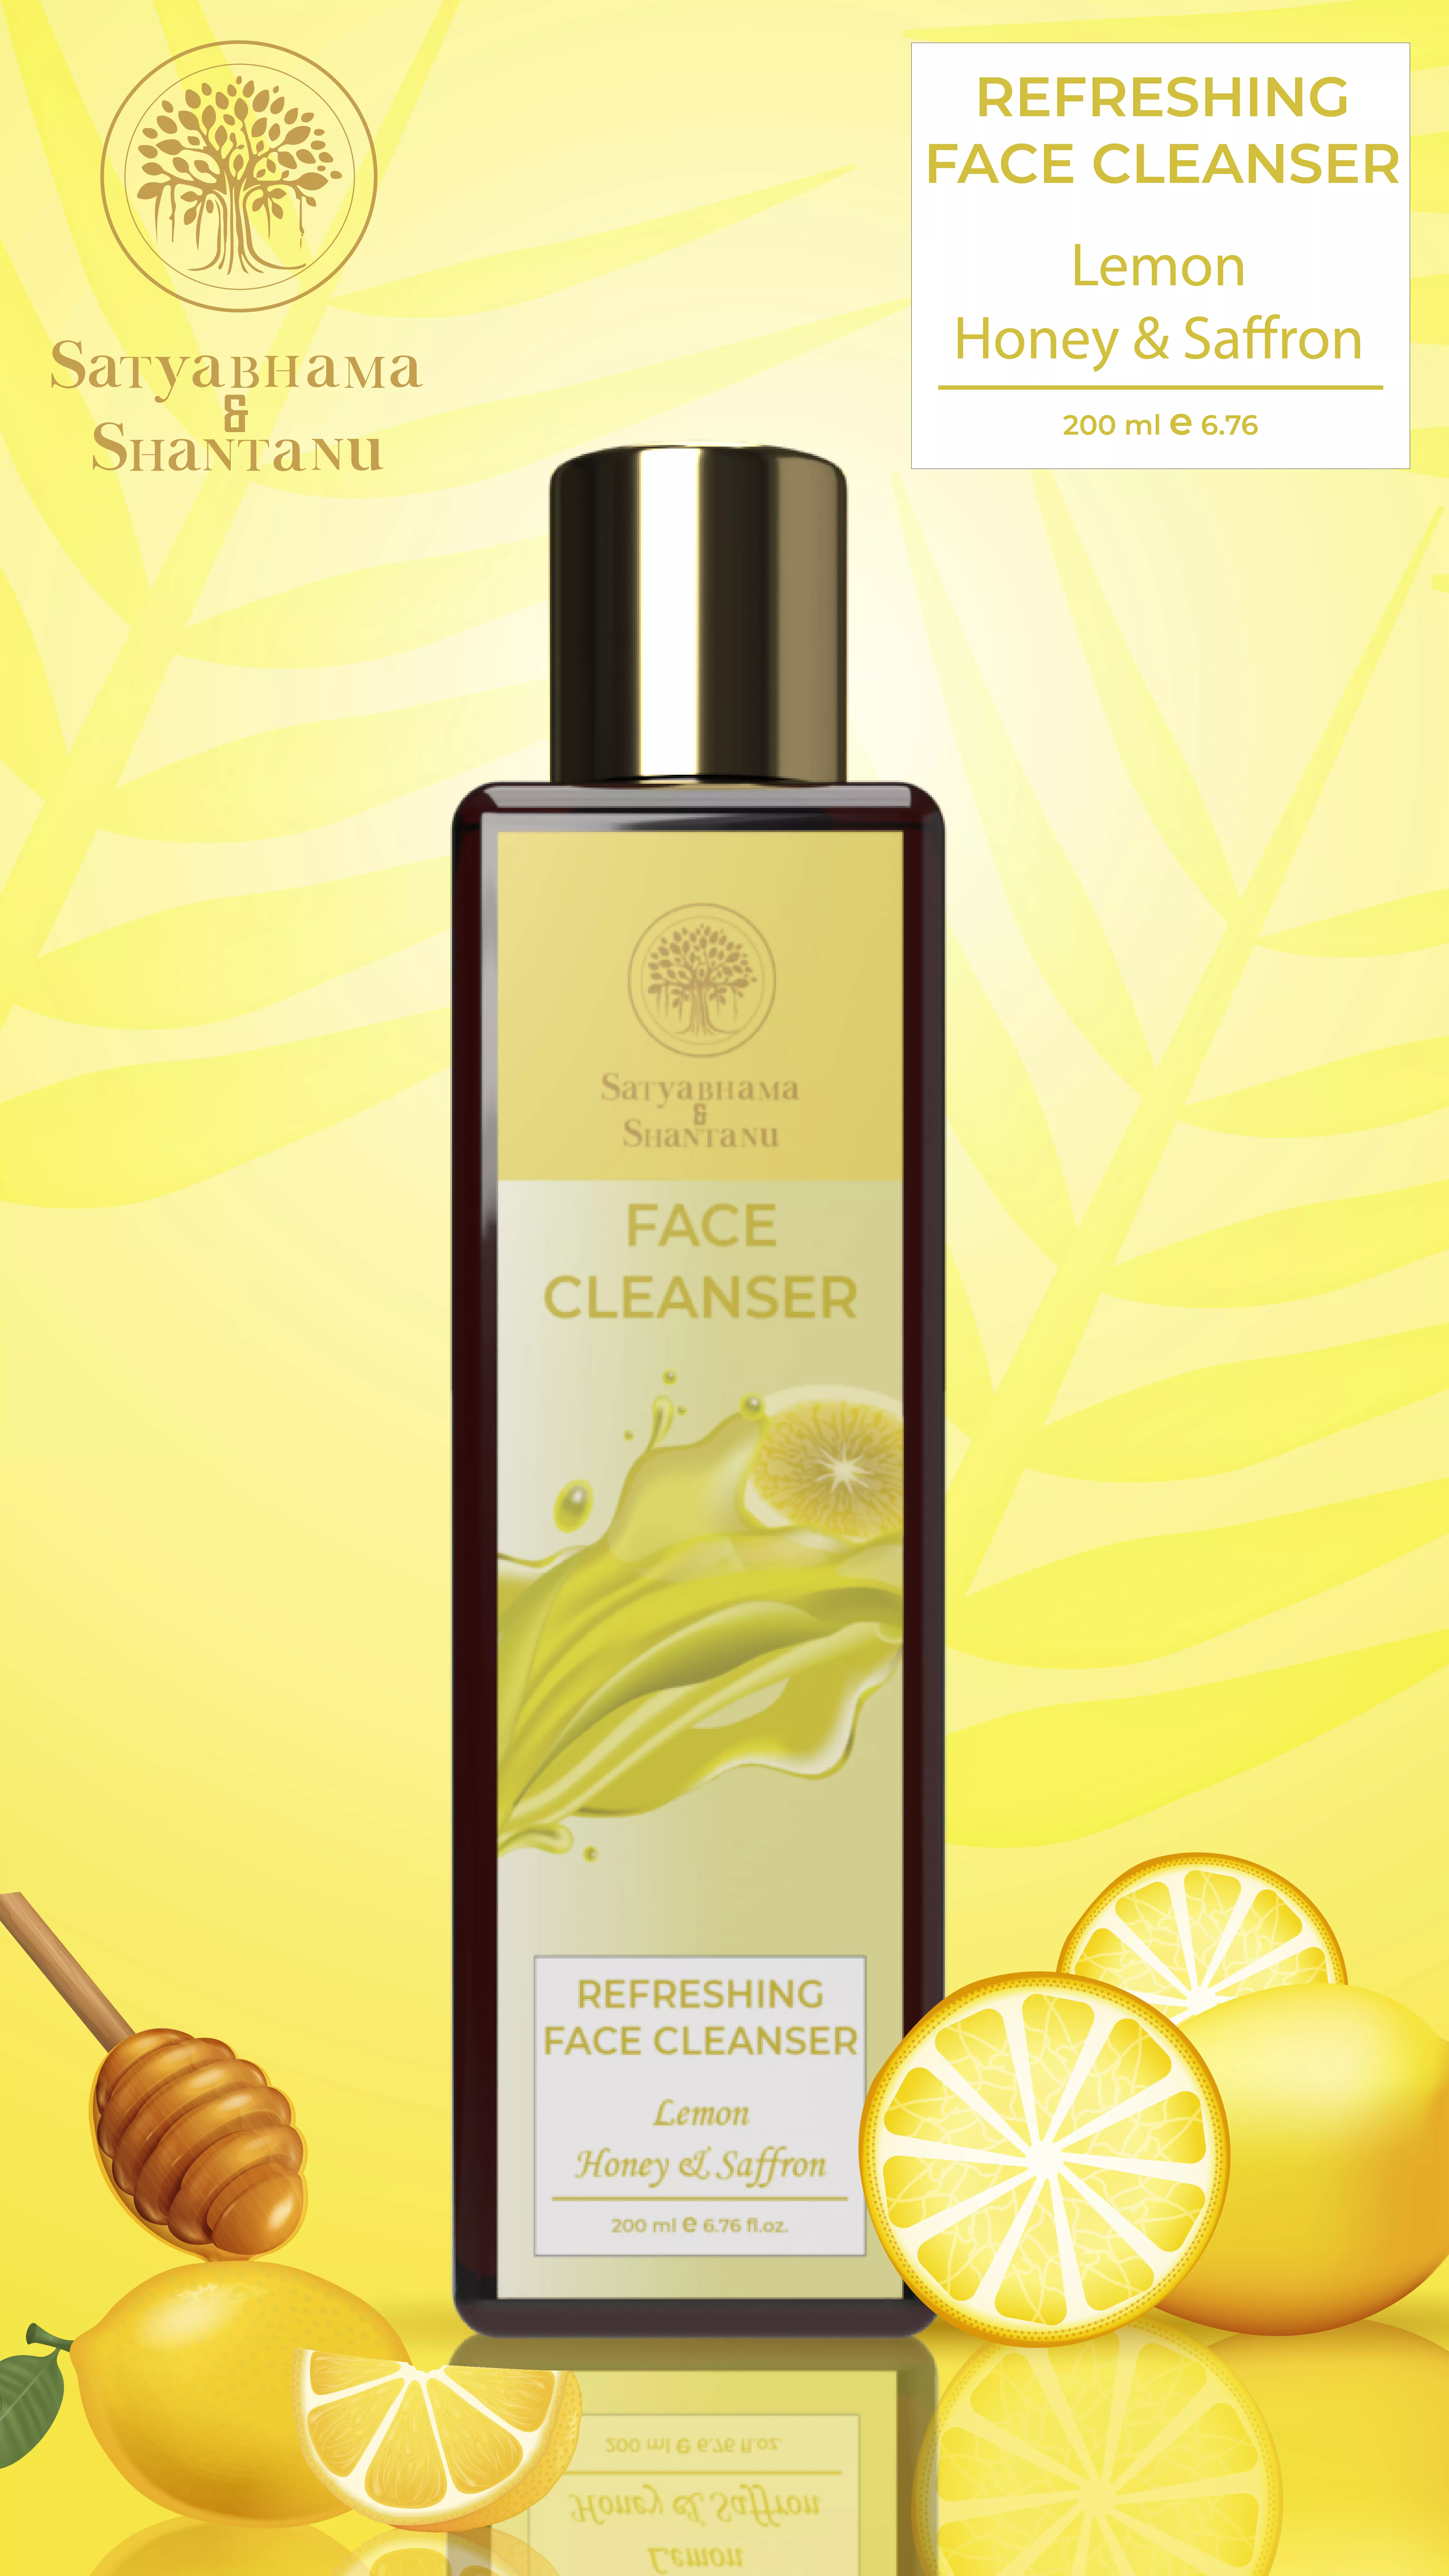 RBV B2B Lemon Honey & Saffron Face Cleanser (200ml)-12 Pcs.